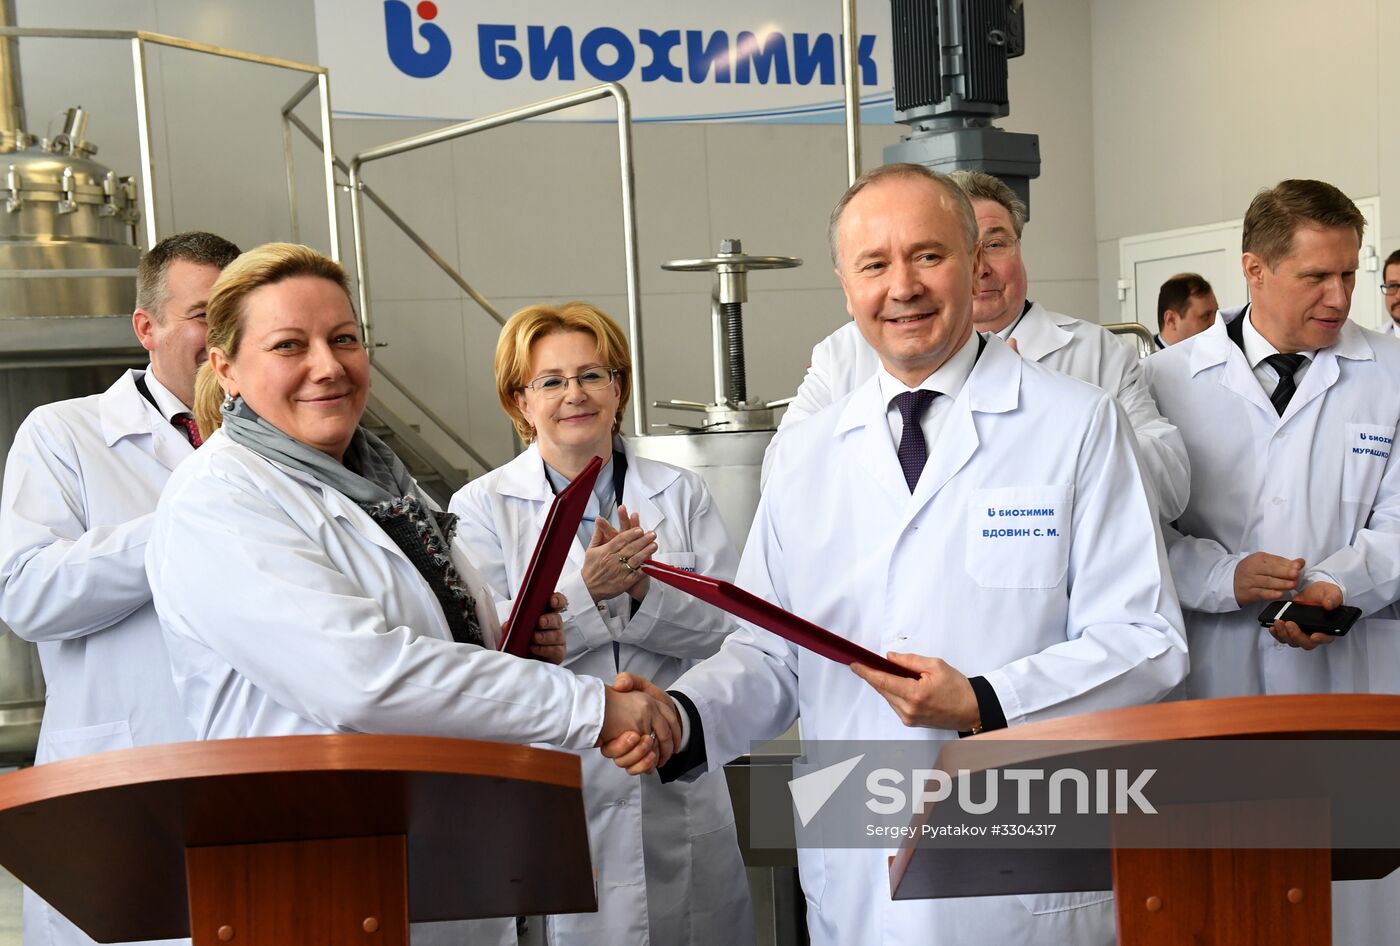 Antibiotics production plant opens at Biokhimik company